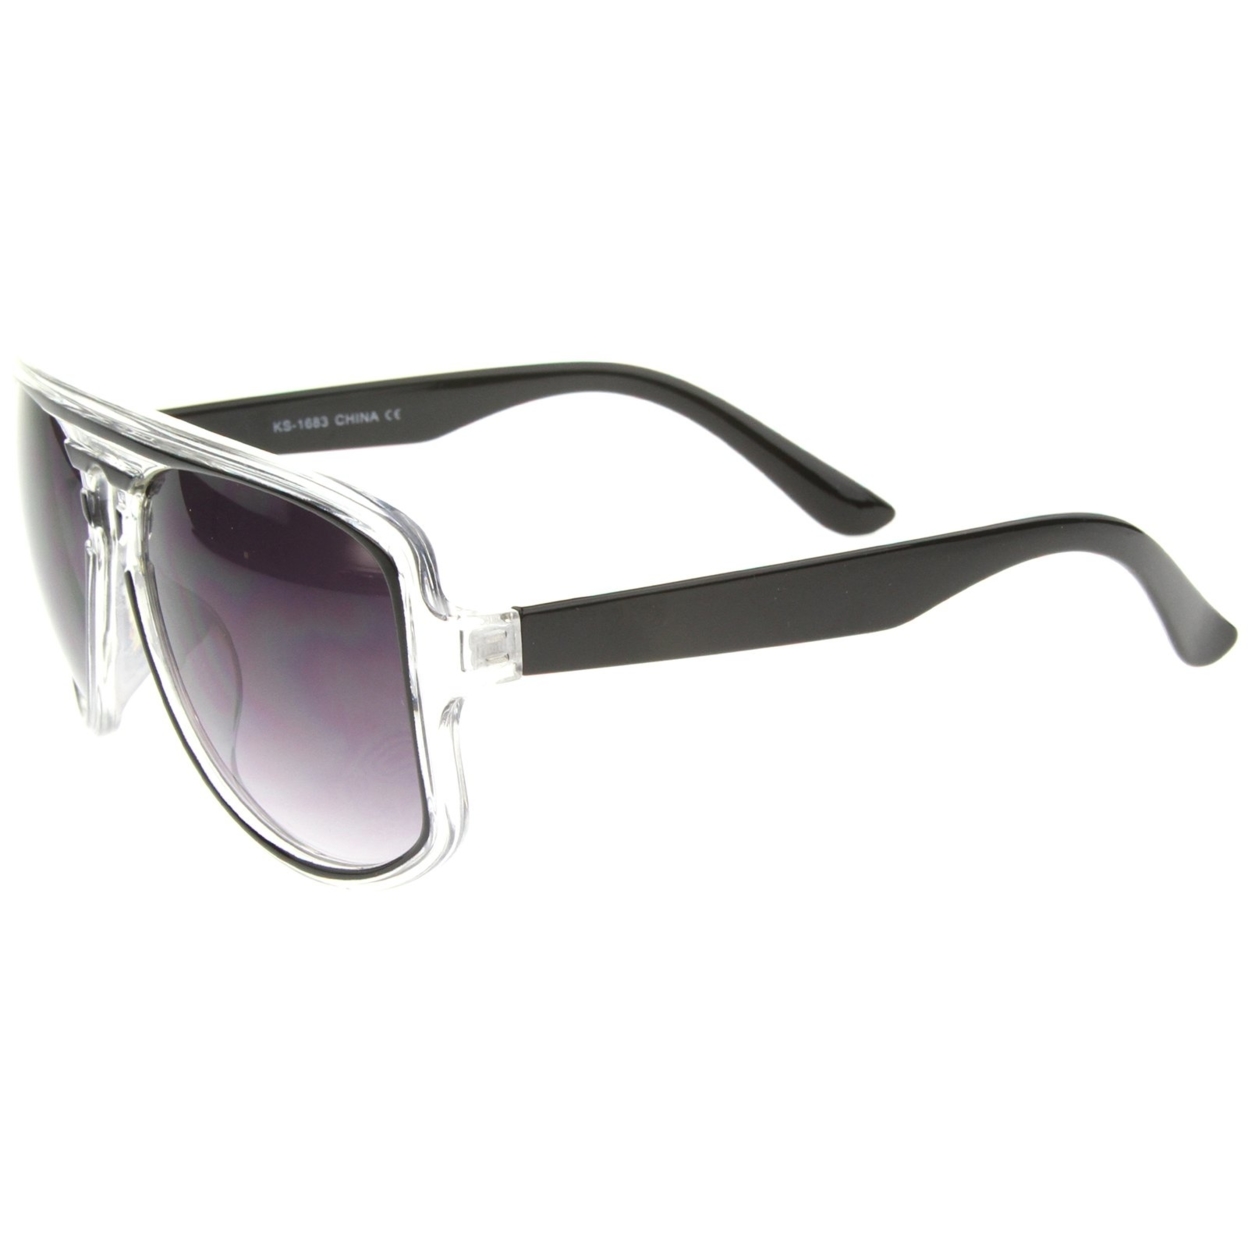 Modern Translucent Frame Keyhole Flat Top Square Aviator Sunglasses 46mm - Tortoise / Amber